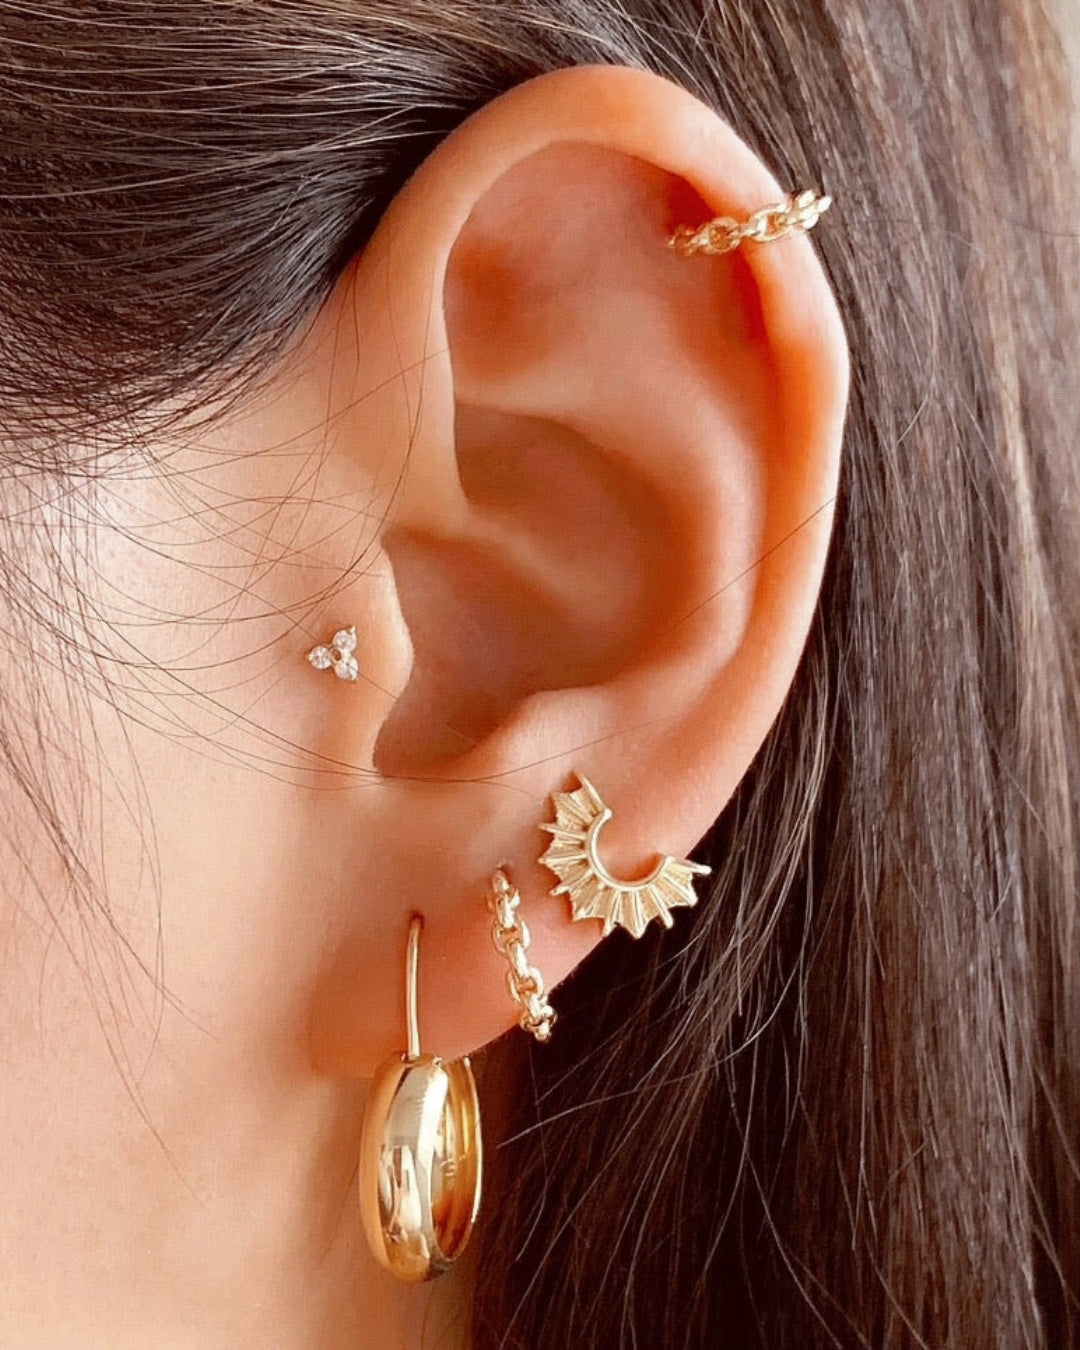 14k gold fill sunray earring studs on a model